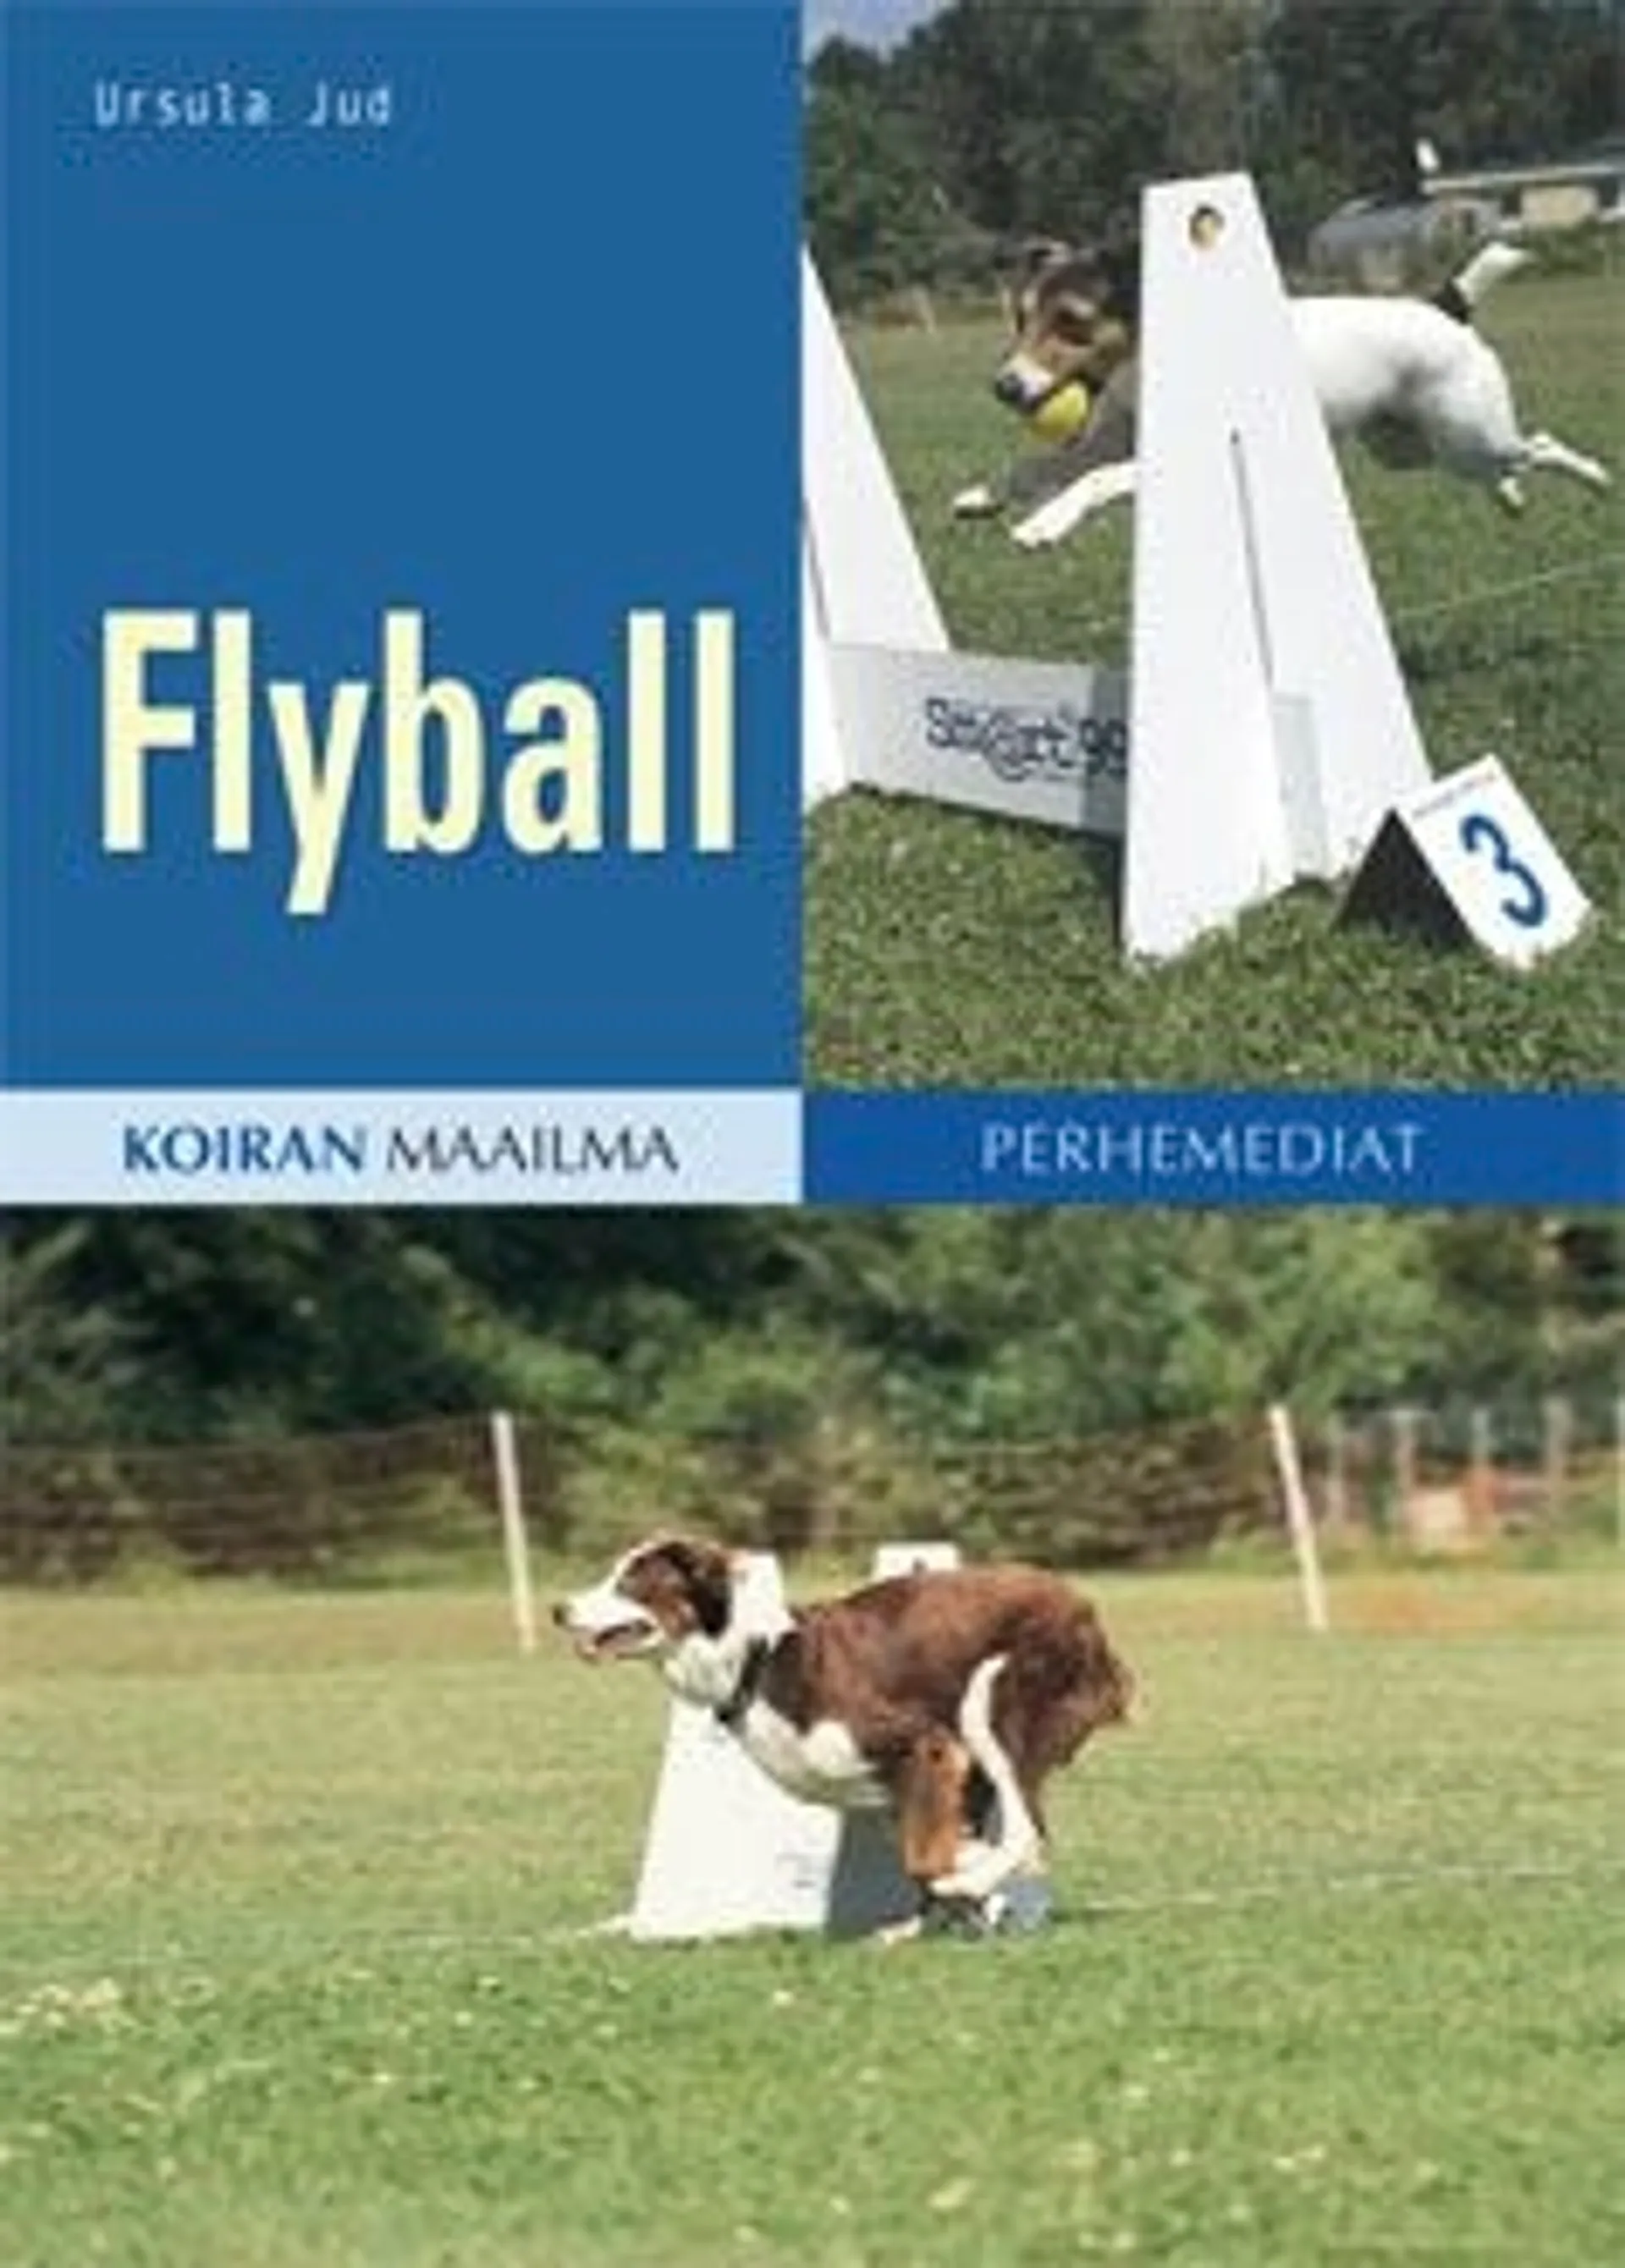 Jud, Flyball